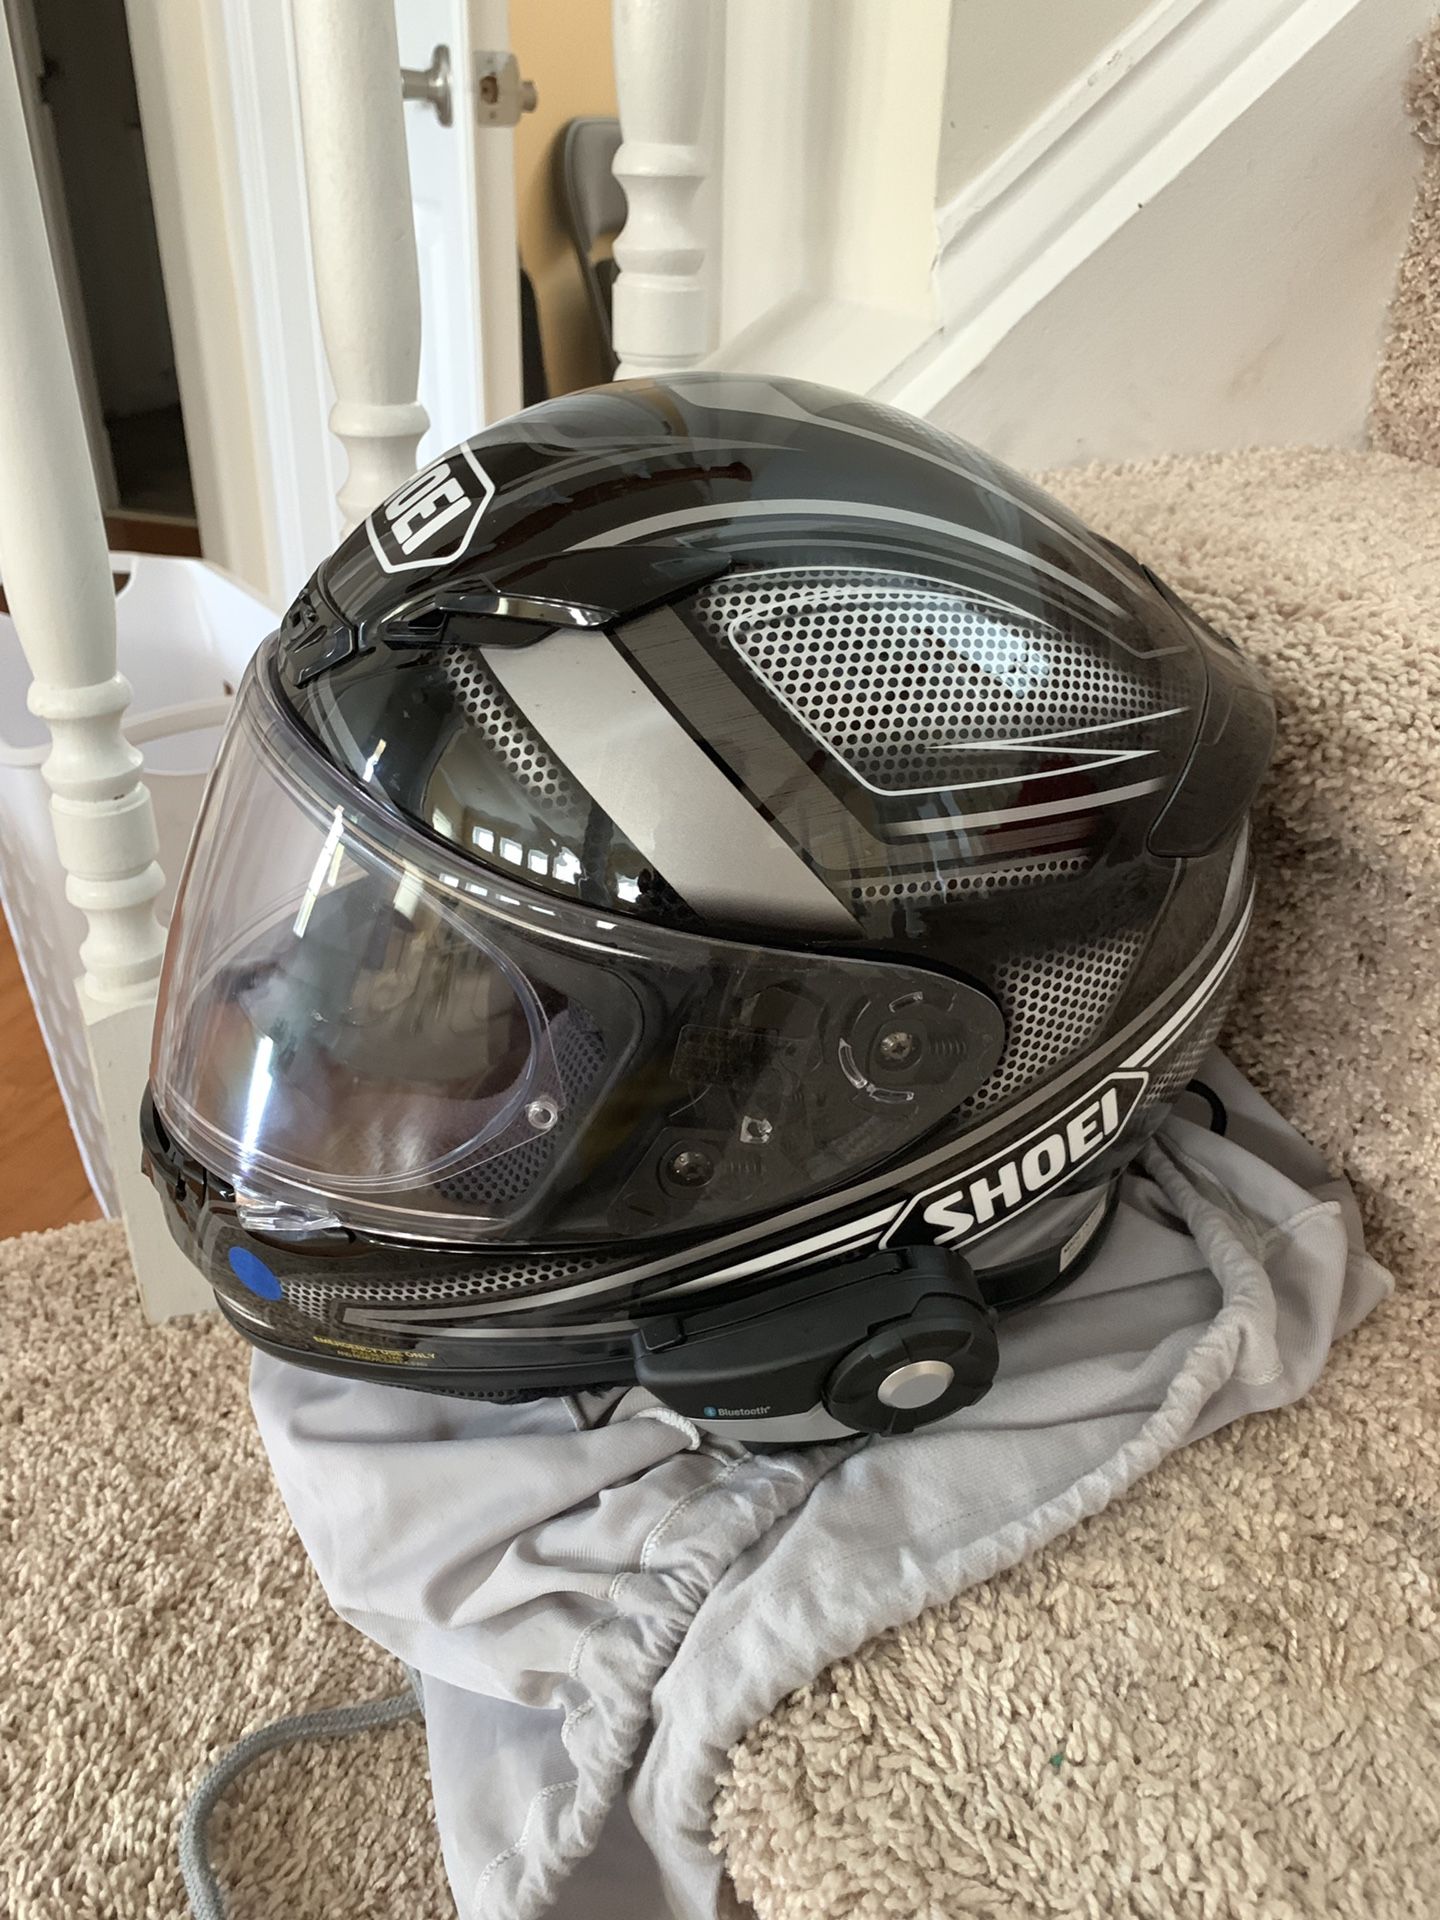 Shoei Rf1200 helmet